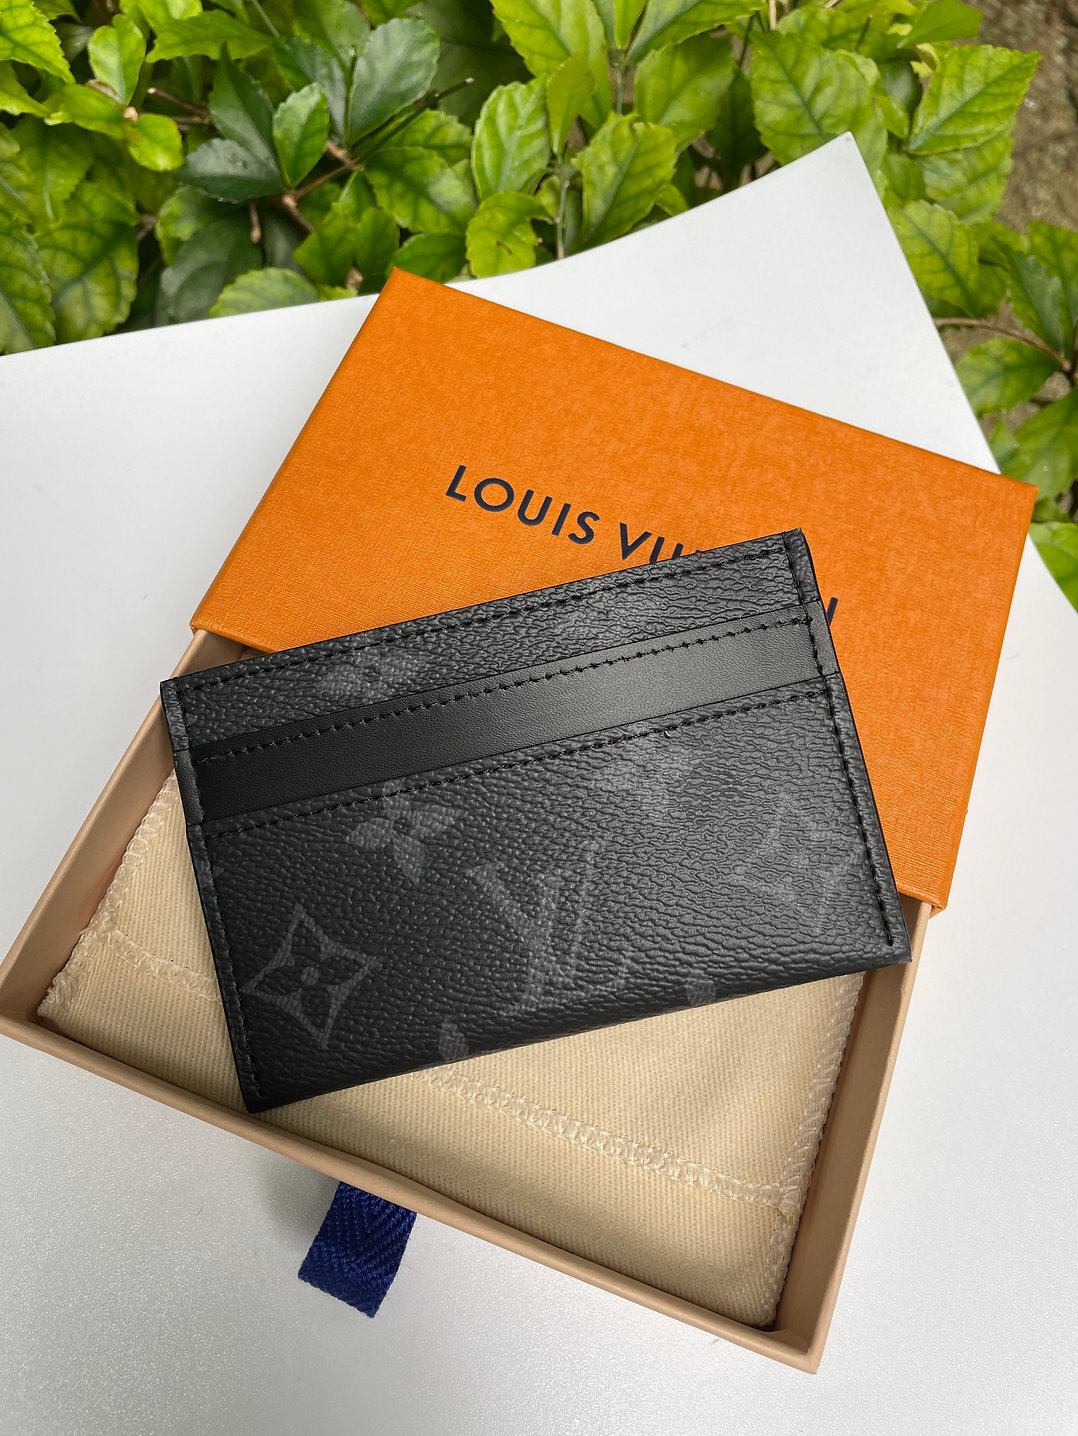 Shop Louis Vuitton Pocket organizer (M61696) by Repay